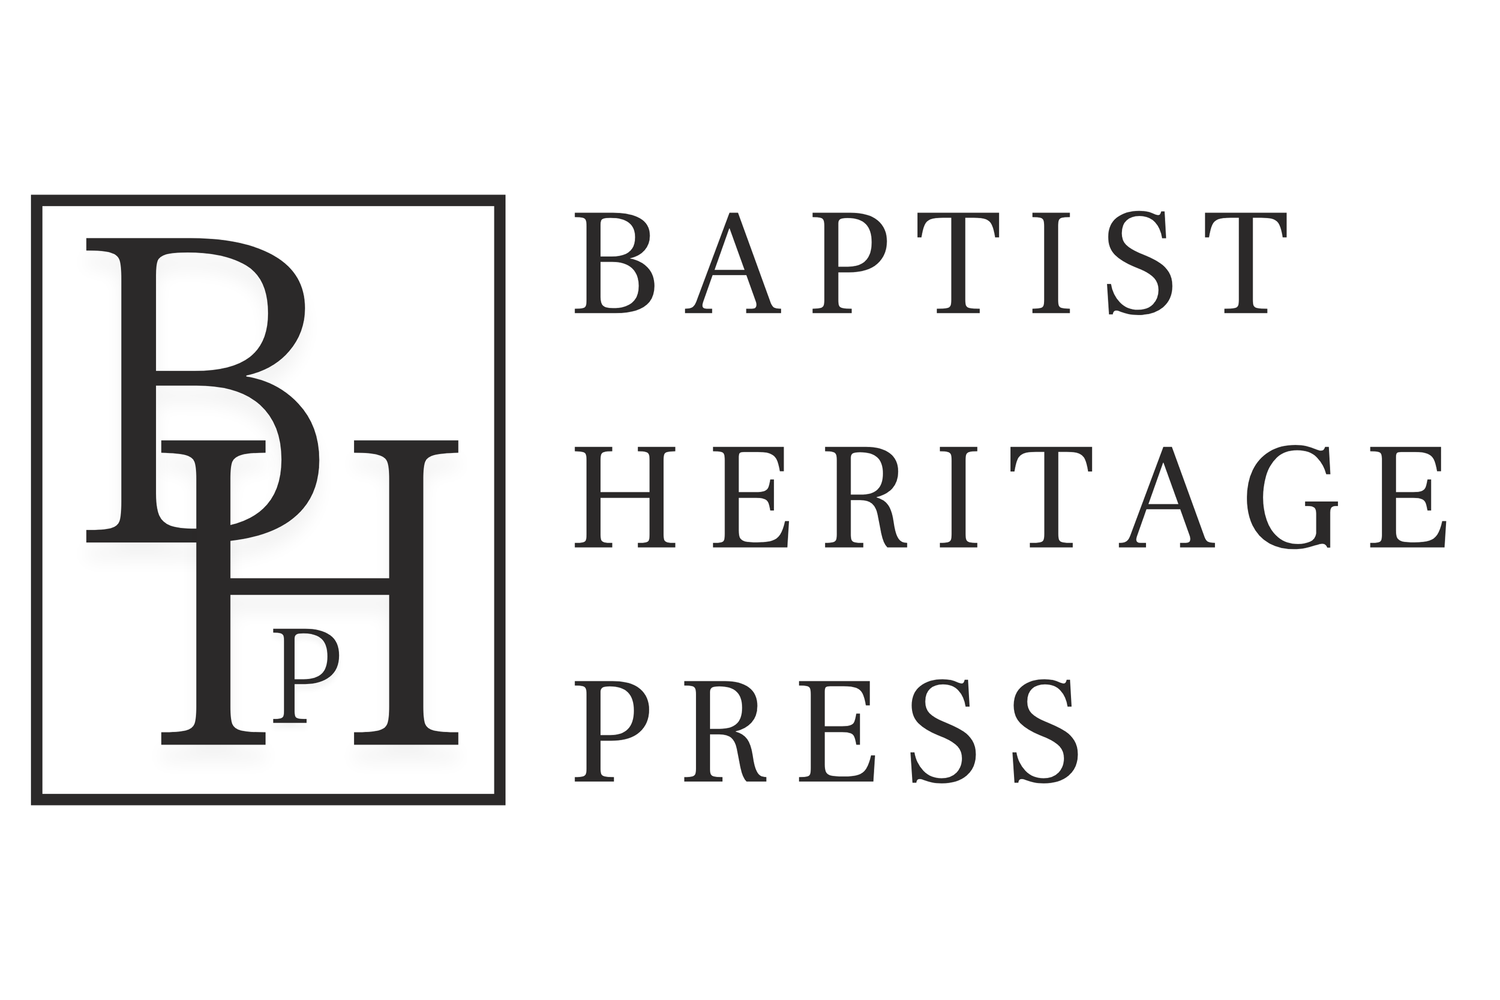 BAPTIST HERITAGE PRESS